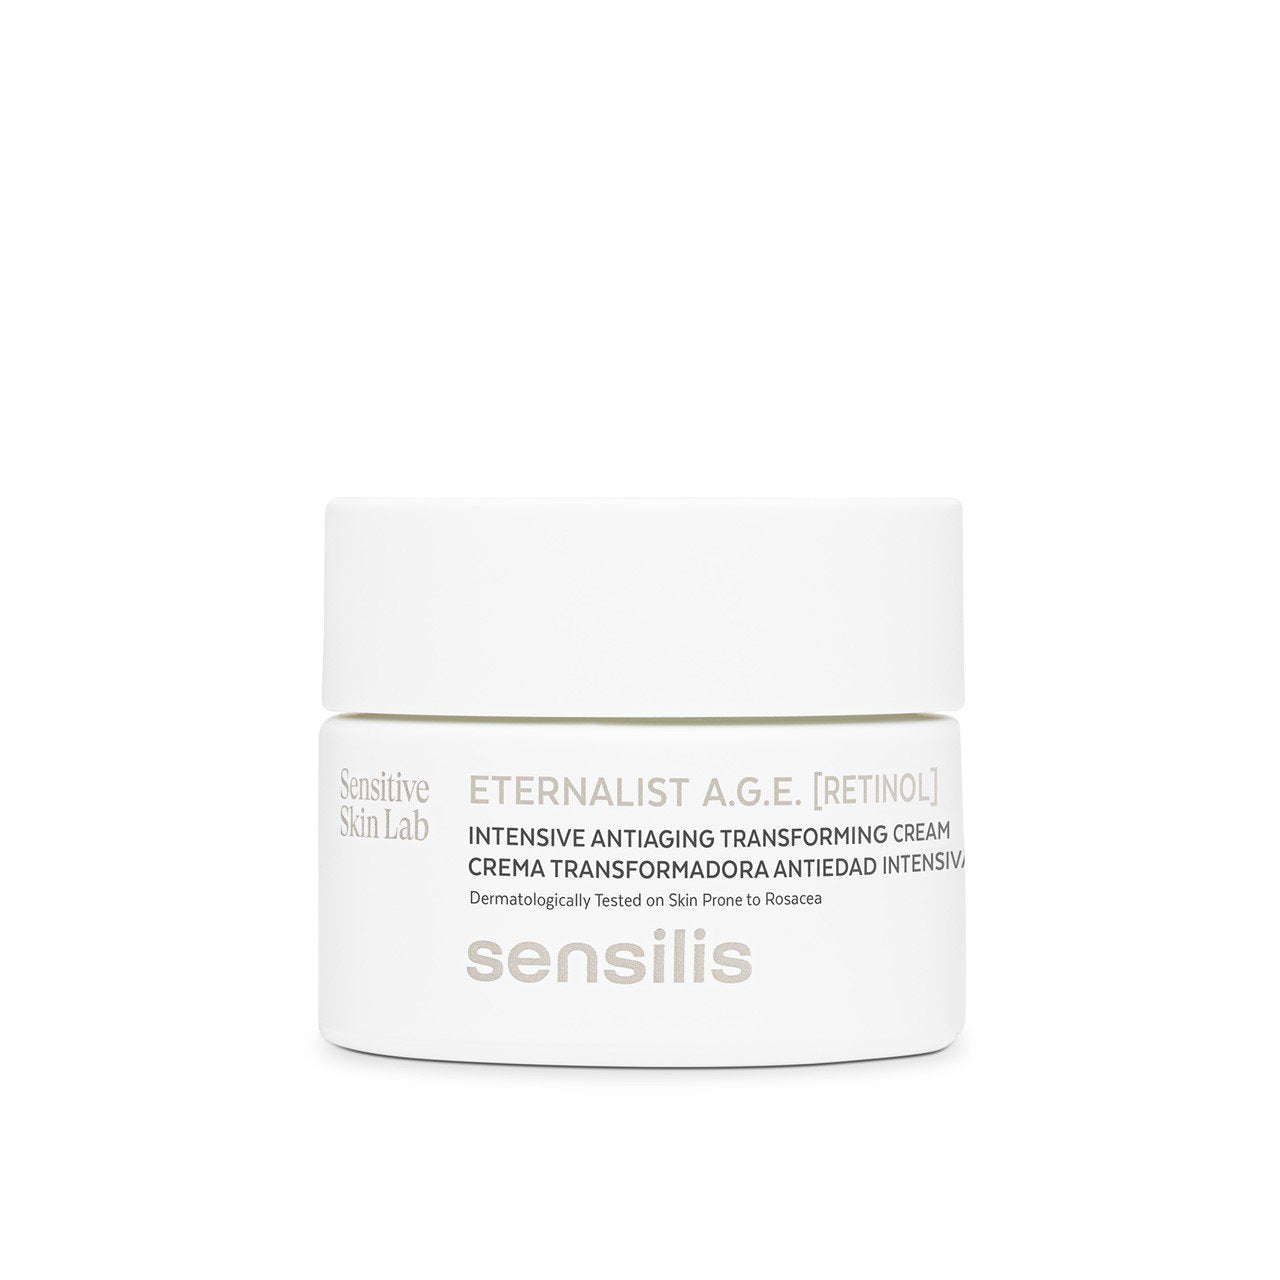 Sensilis Eternalist A.G.E. [Retinol] Intensive Antiaging Cream 50ml